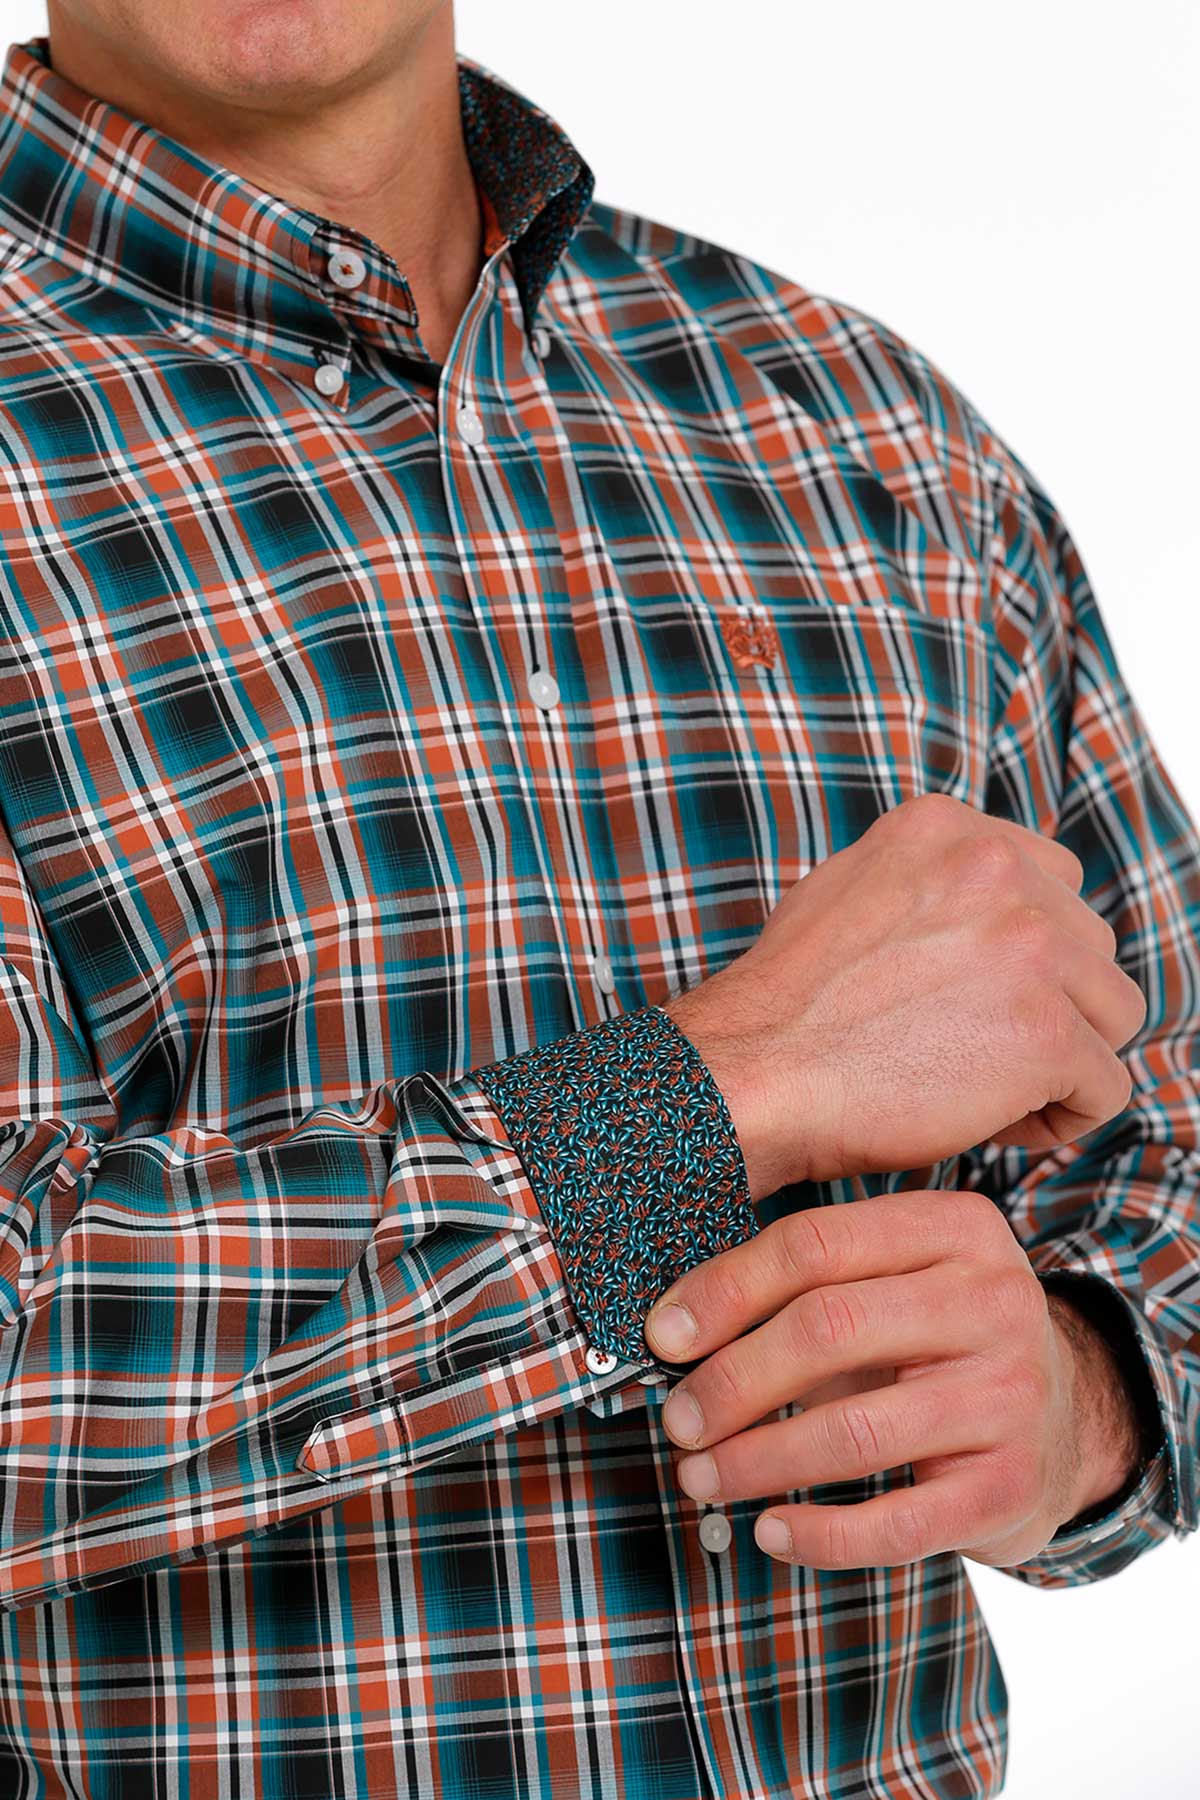 CINCH Men's Plaid Button-Down Western Shirt